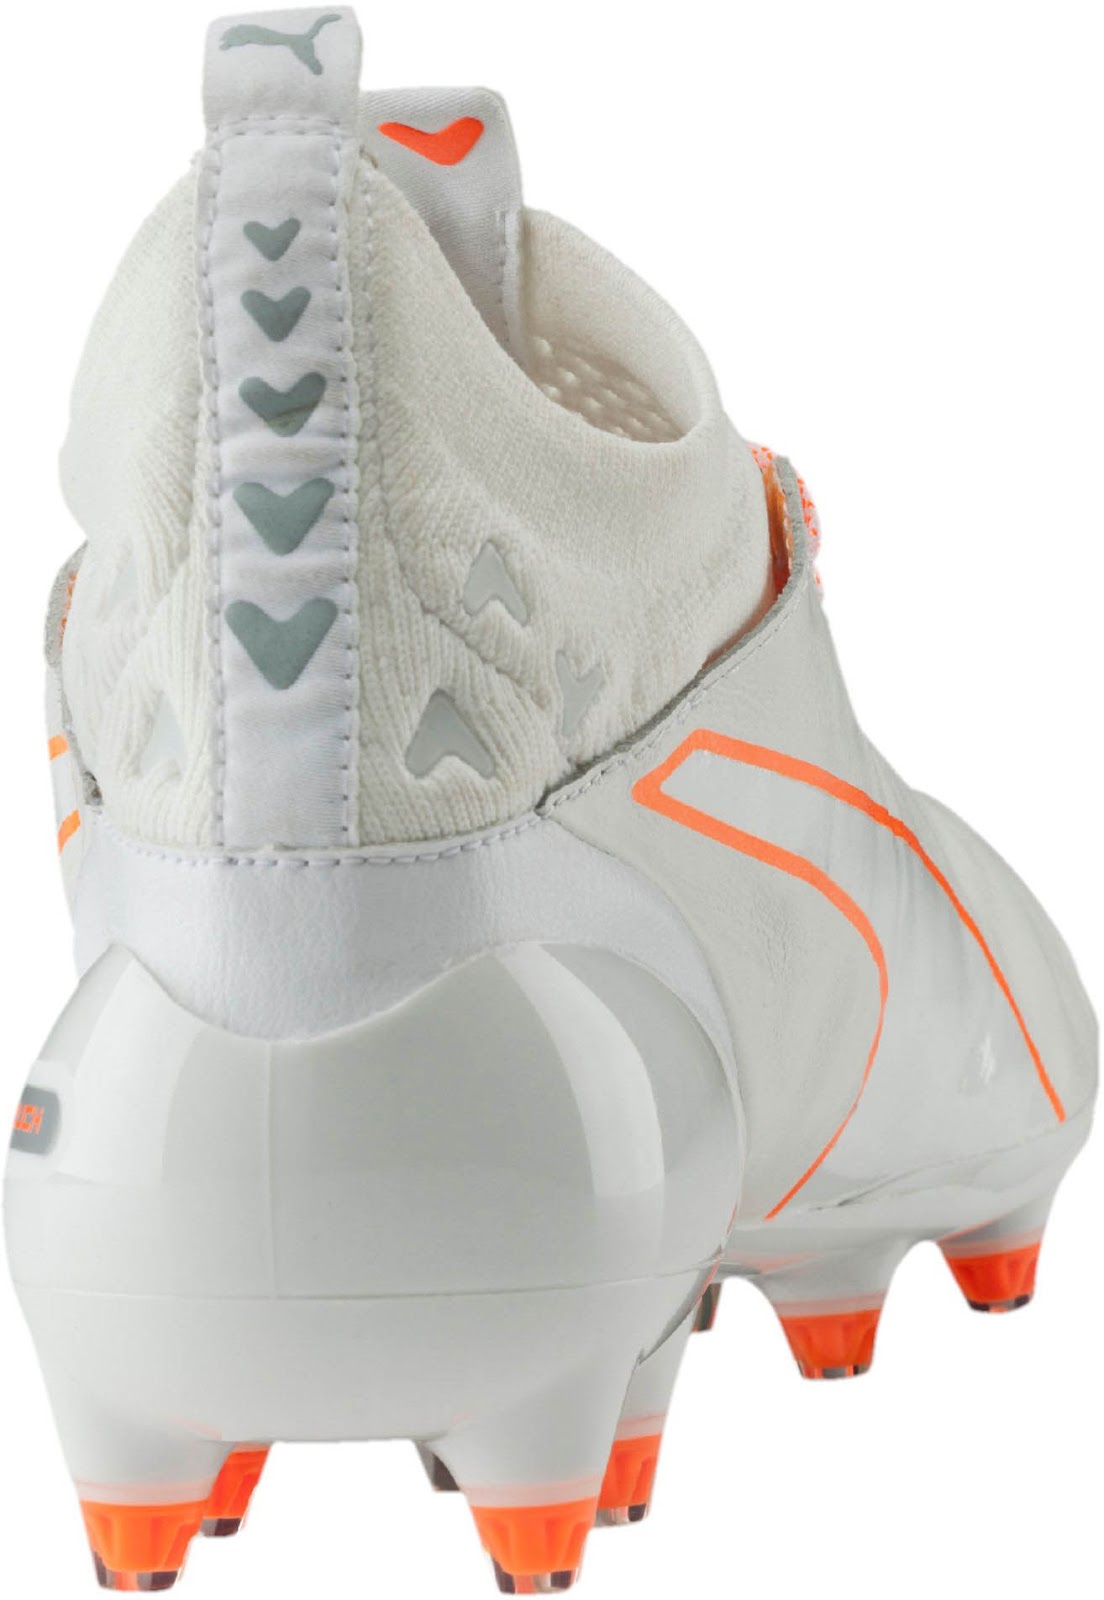 white-orange-puma-evotouch-2016-17-boots Heel